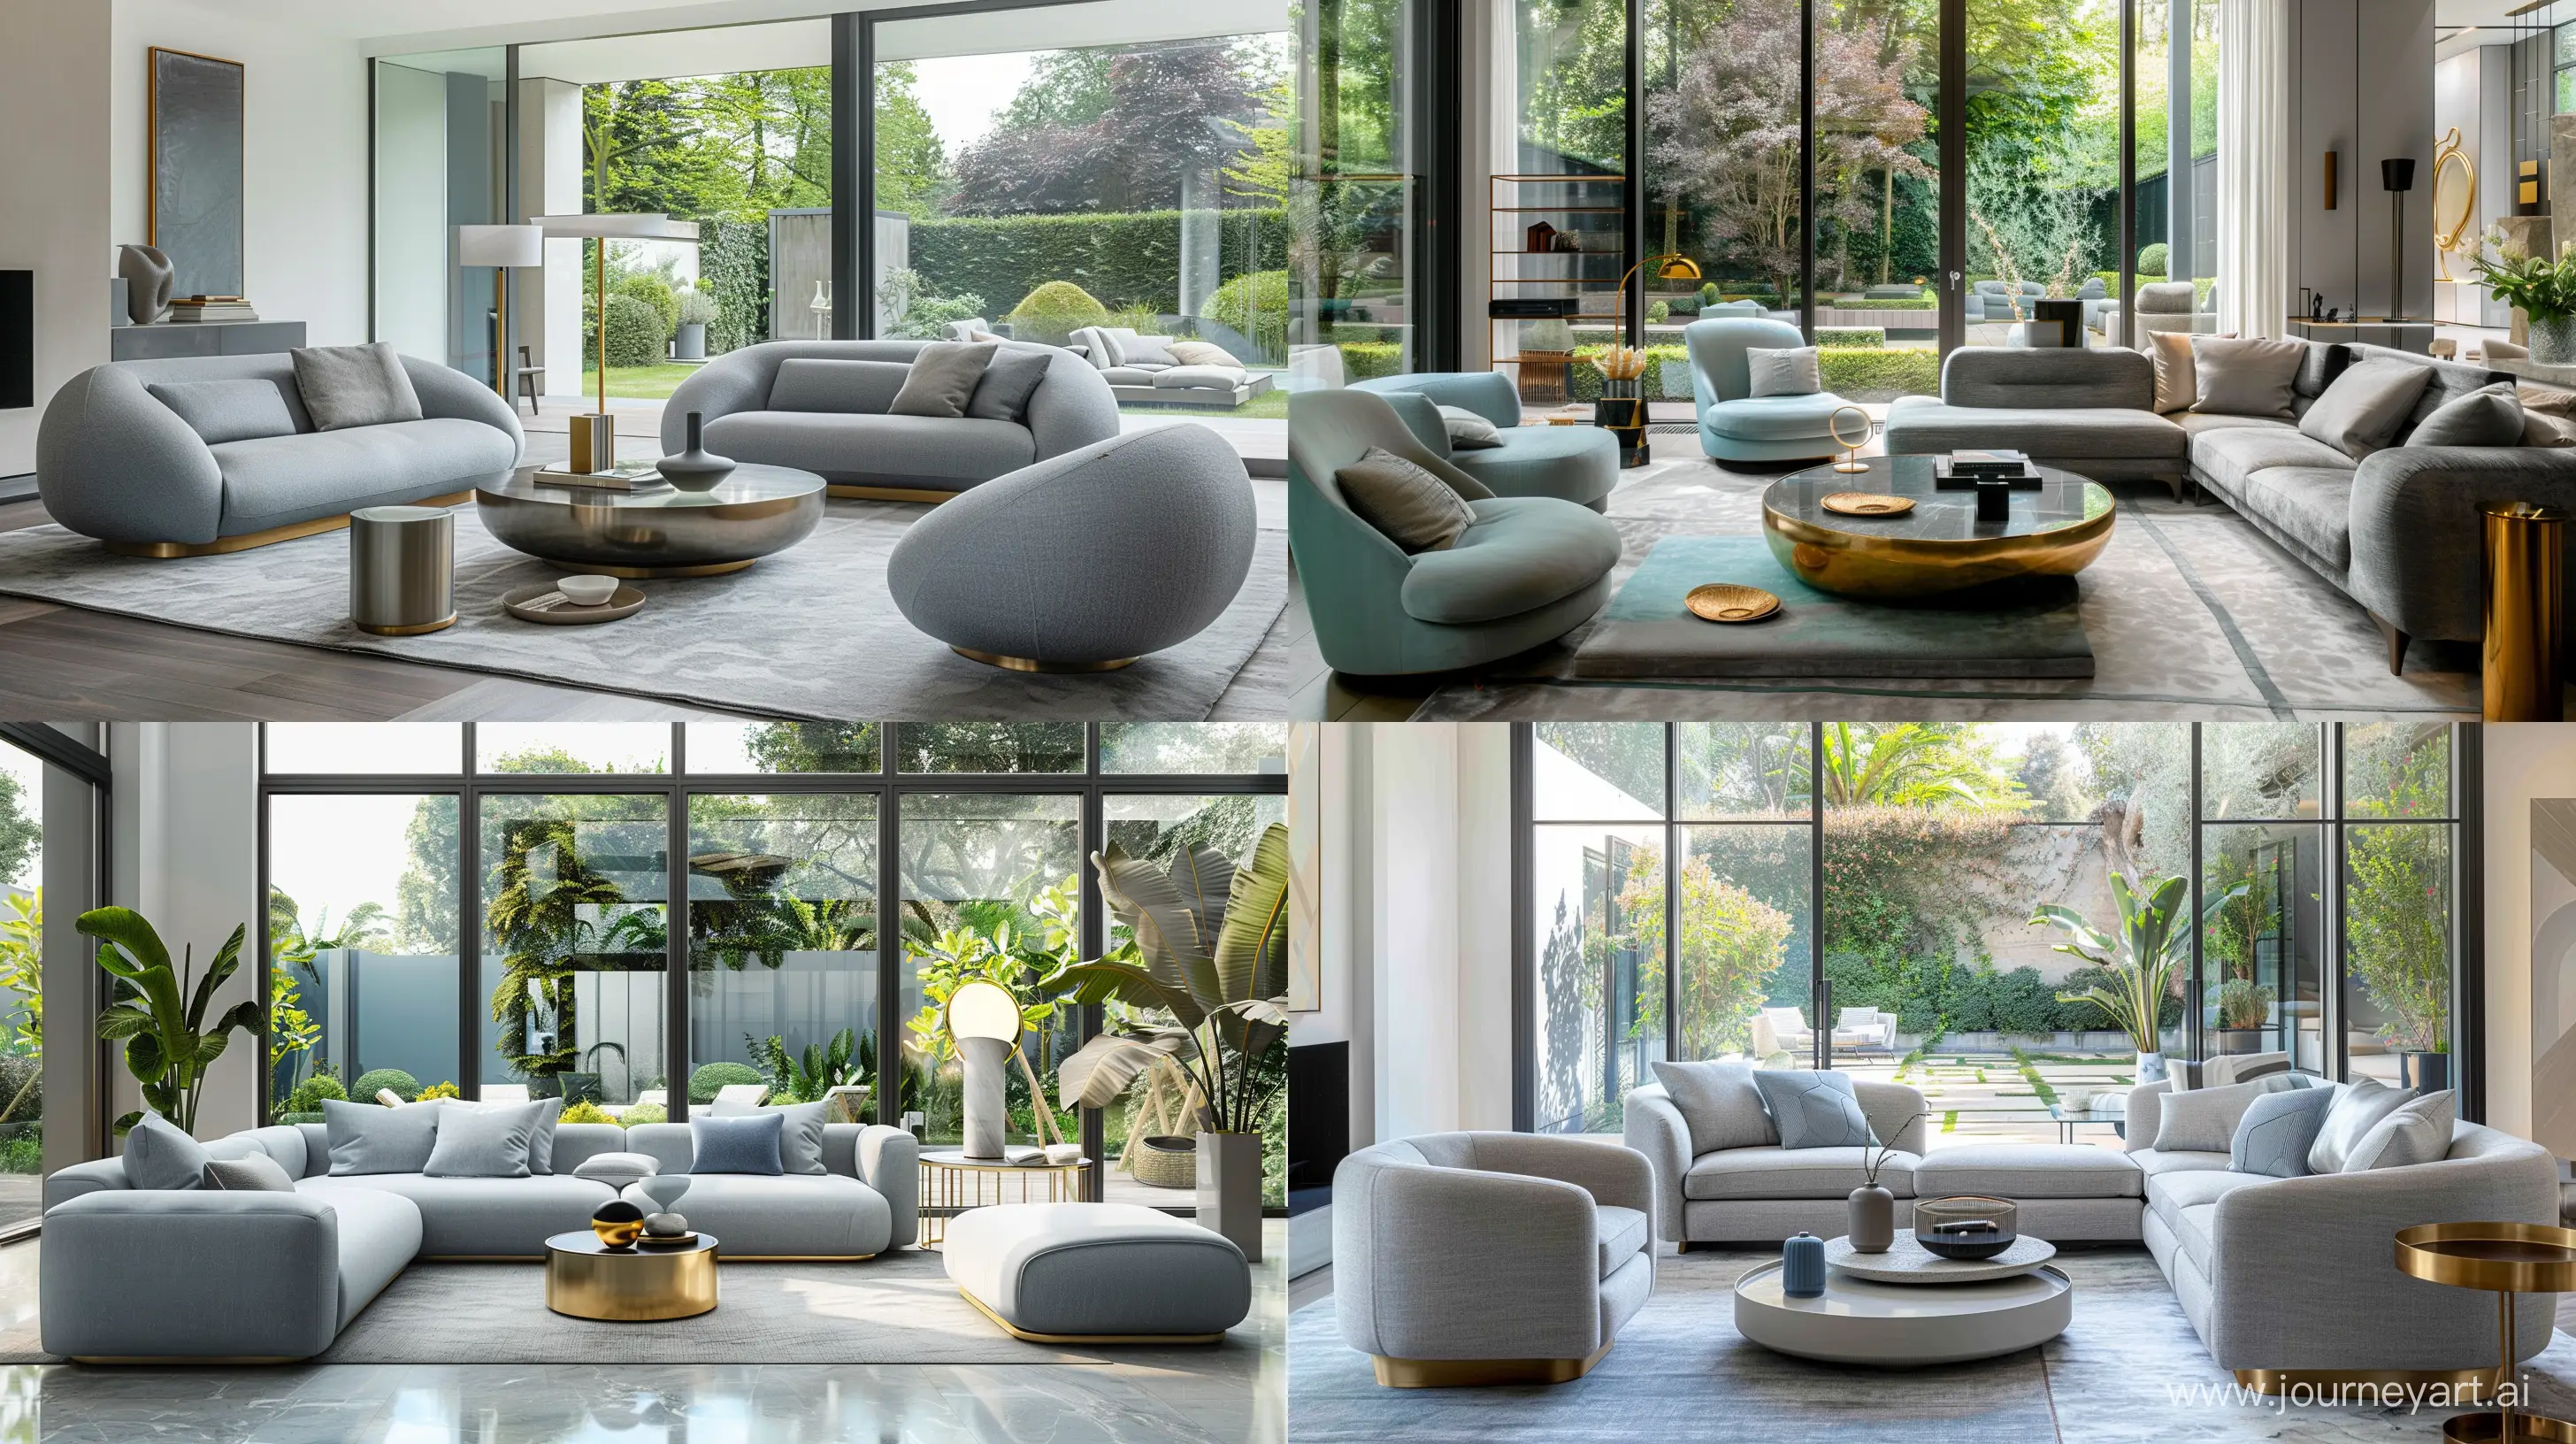 Sleek-Modern-Living-Room-with-Natural-Light-and-Serene-Garden-View